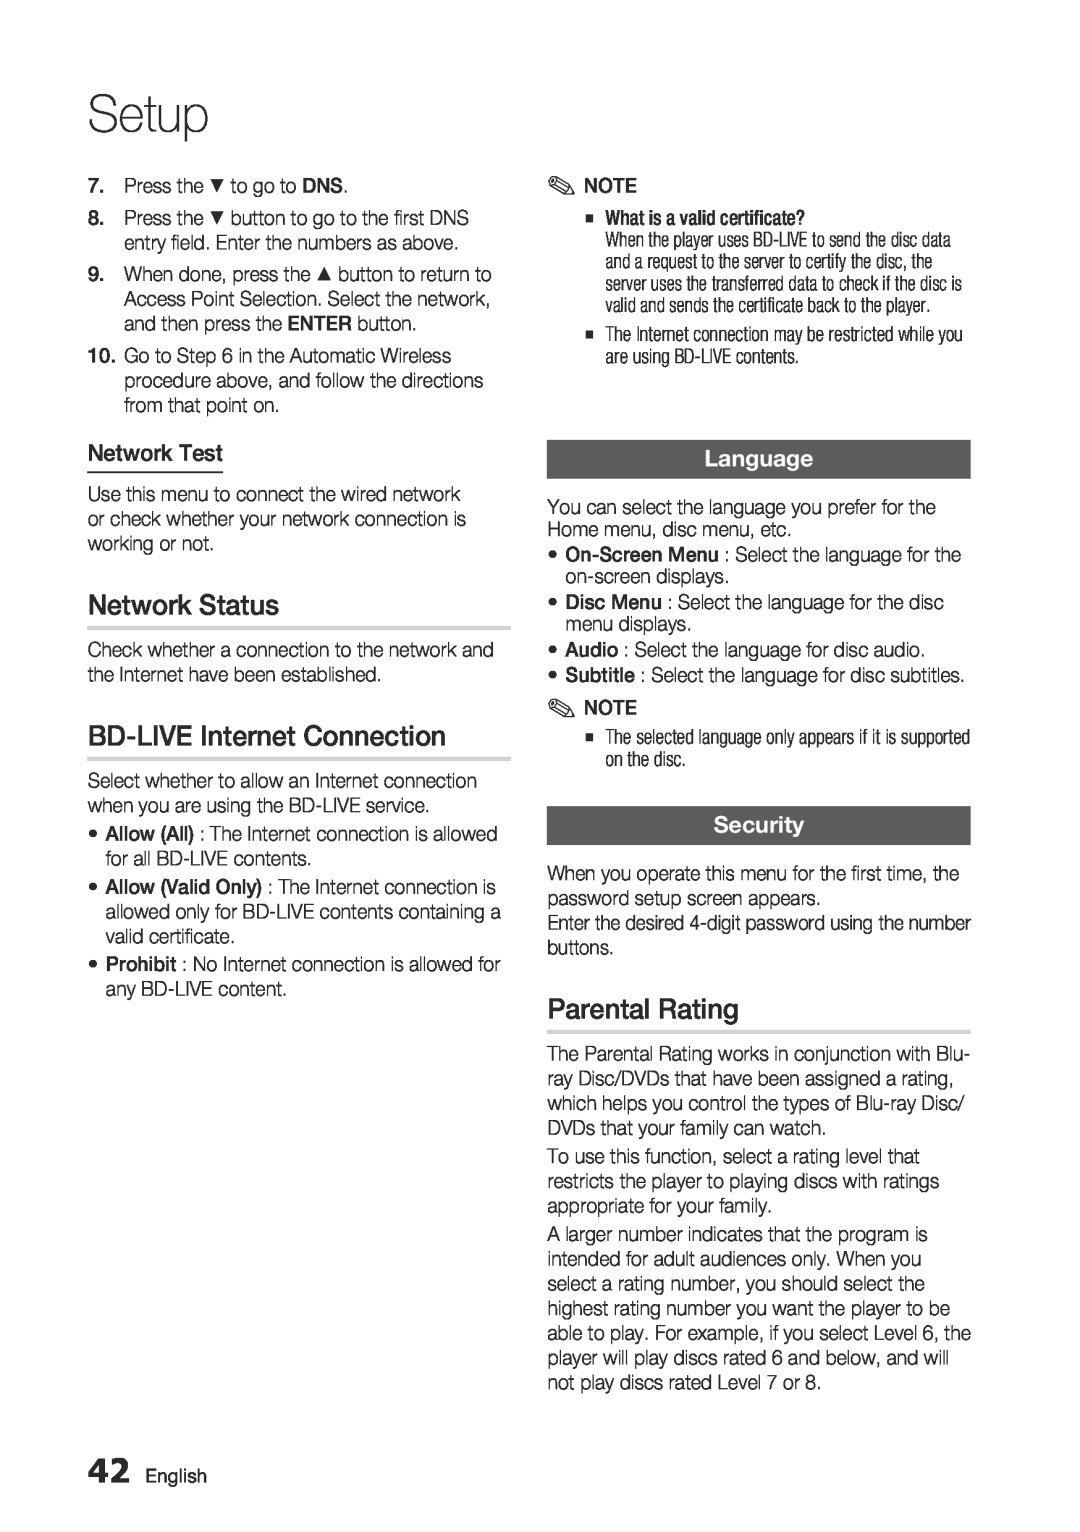 Samsung BD-C7500/EDC Network Status, BD-LIVE Internet Connection, Parental Rating, Network Test, Language, Security, Setup 